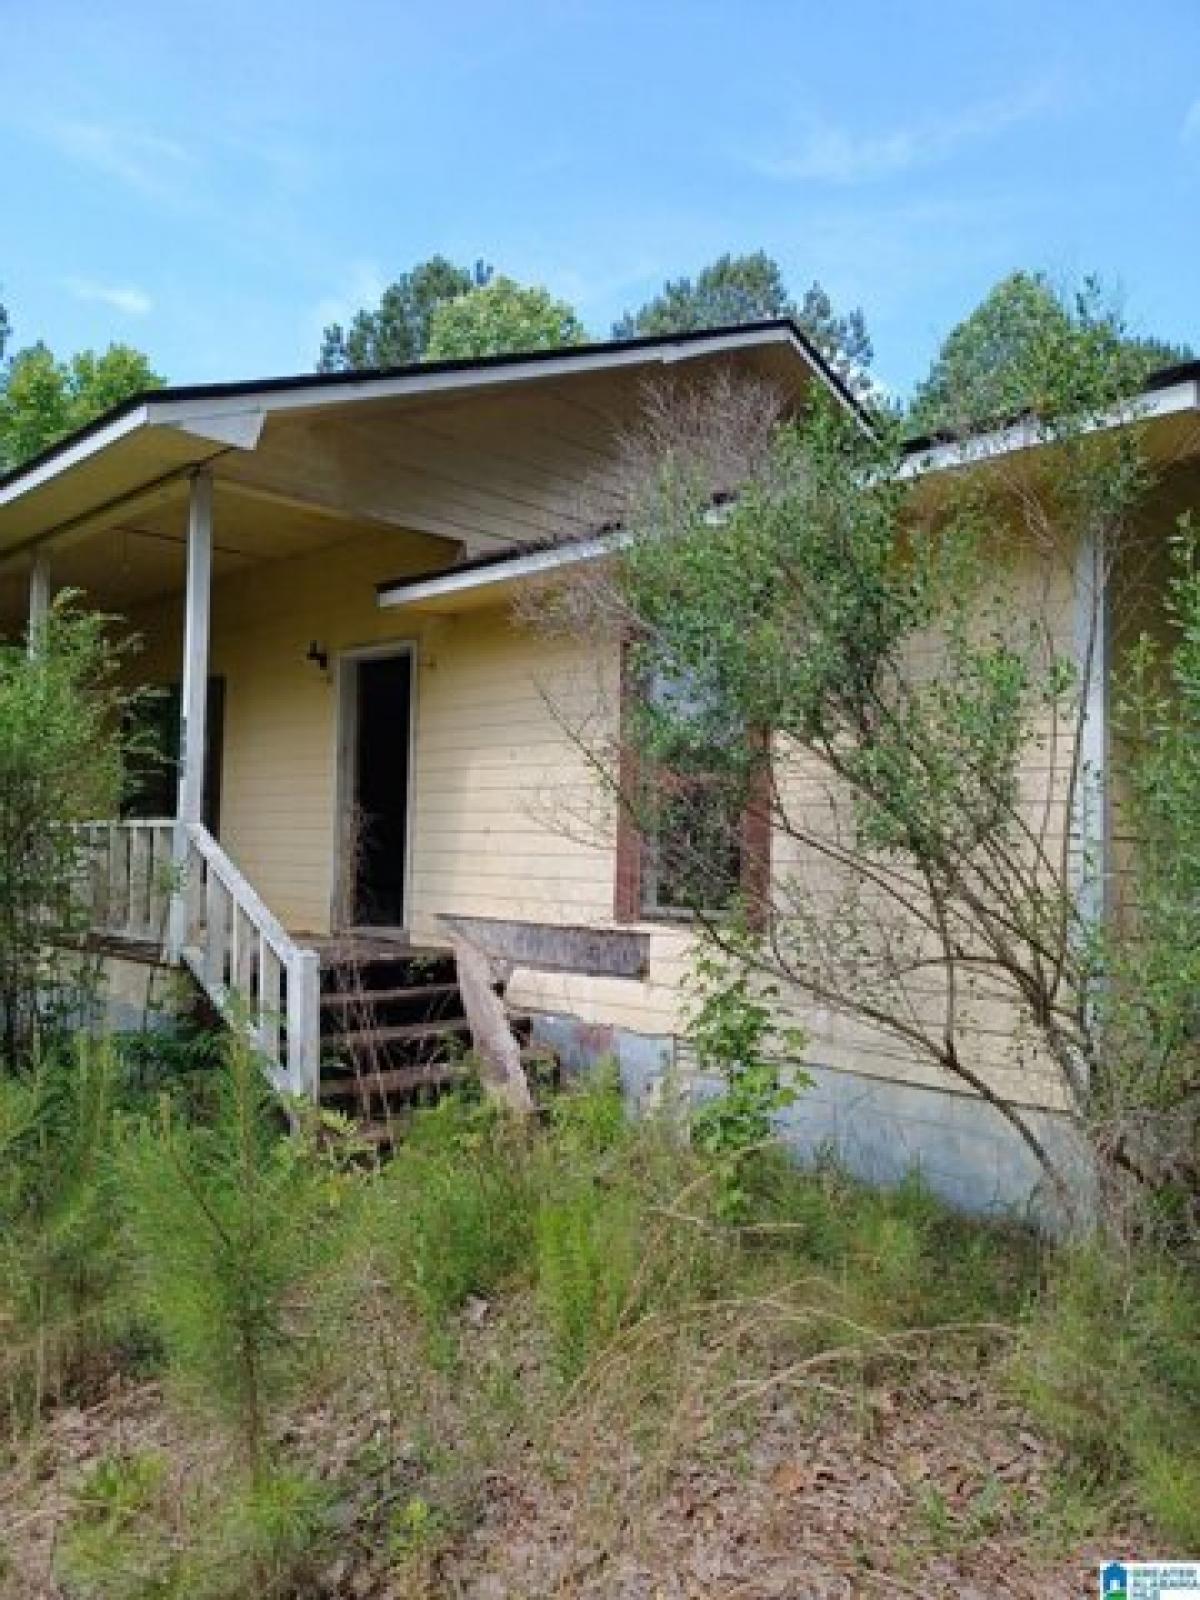 Picture of Home For Sale in Eldridge, Alabama, United States